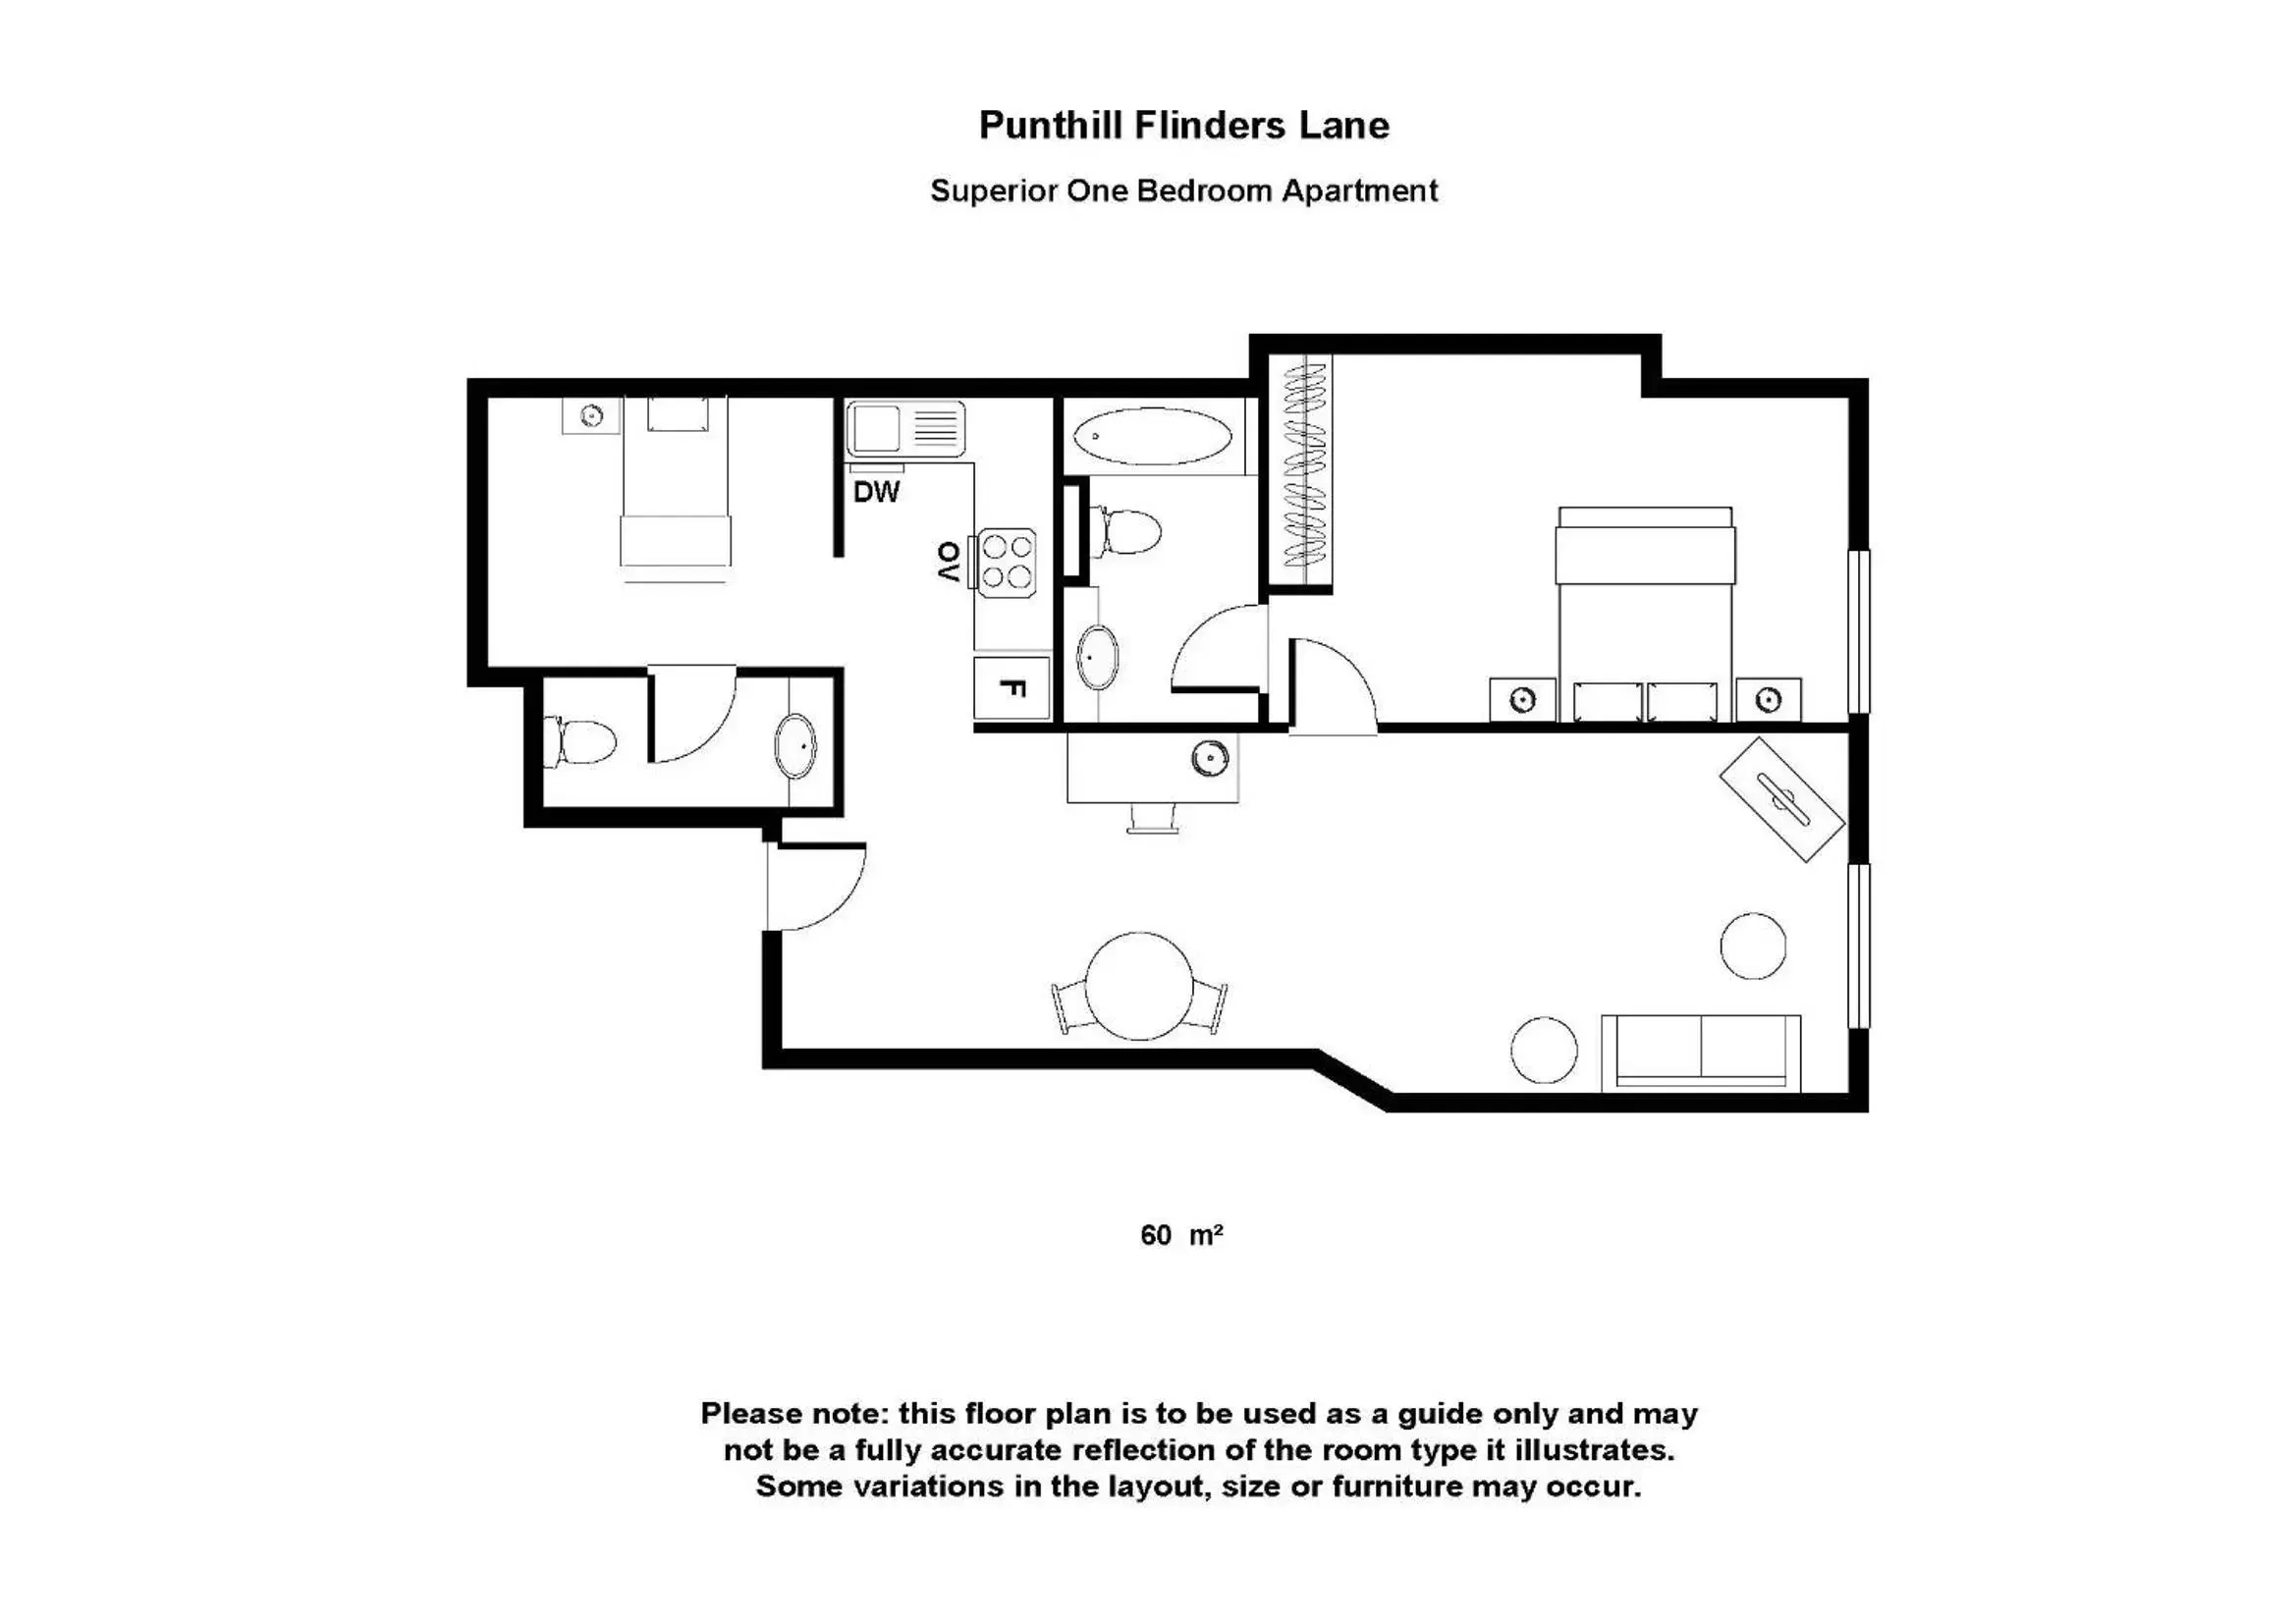 Other, Floor Plan in Punthill Apartment Hotel - Flinders Lane